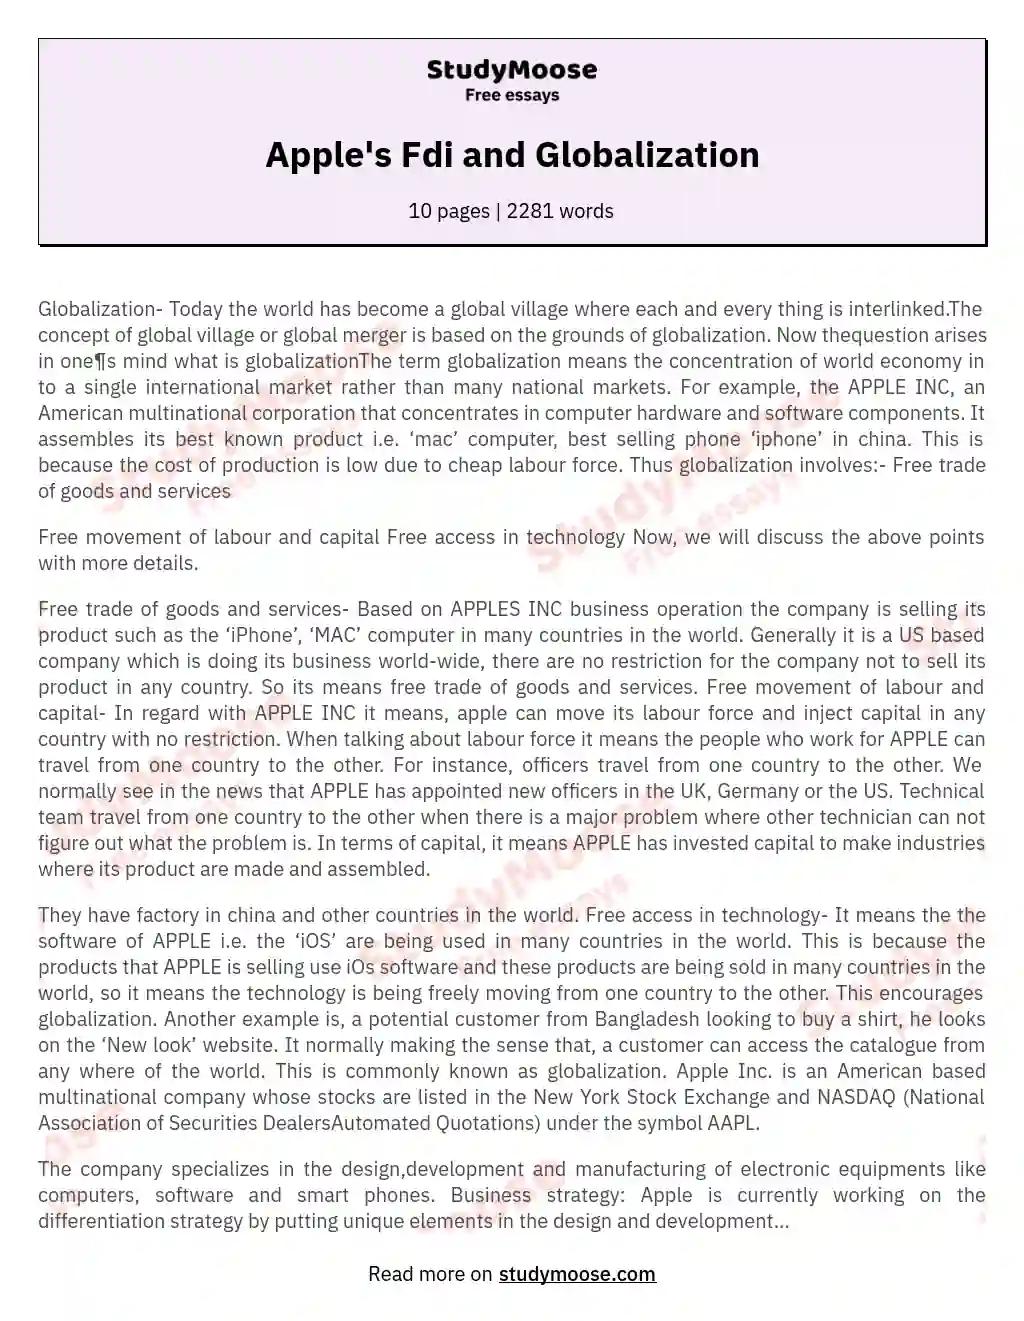 Apple's Fdi and Globalization essay